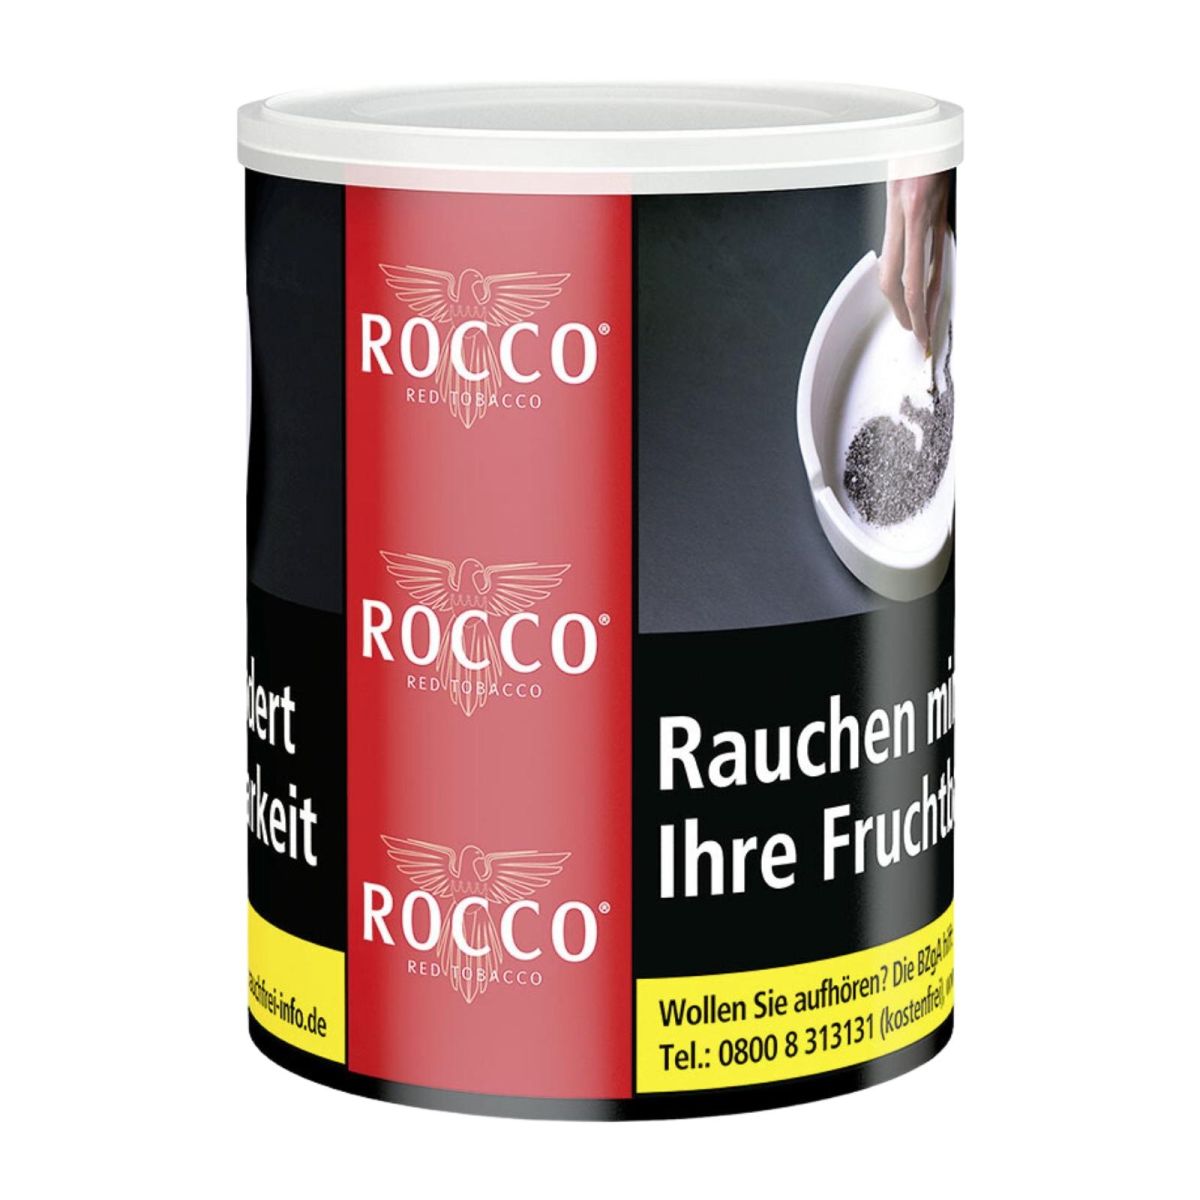 Rocco Rocco Red Tobacco bei www.Tabakring.de kaufen